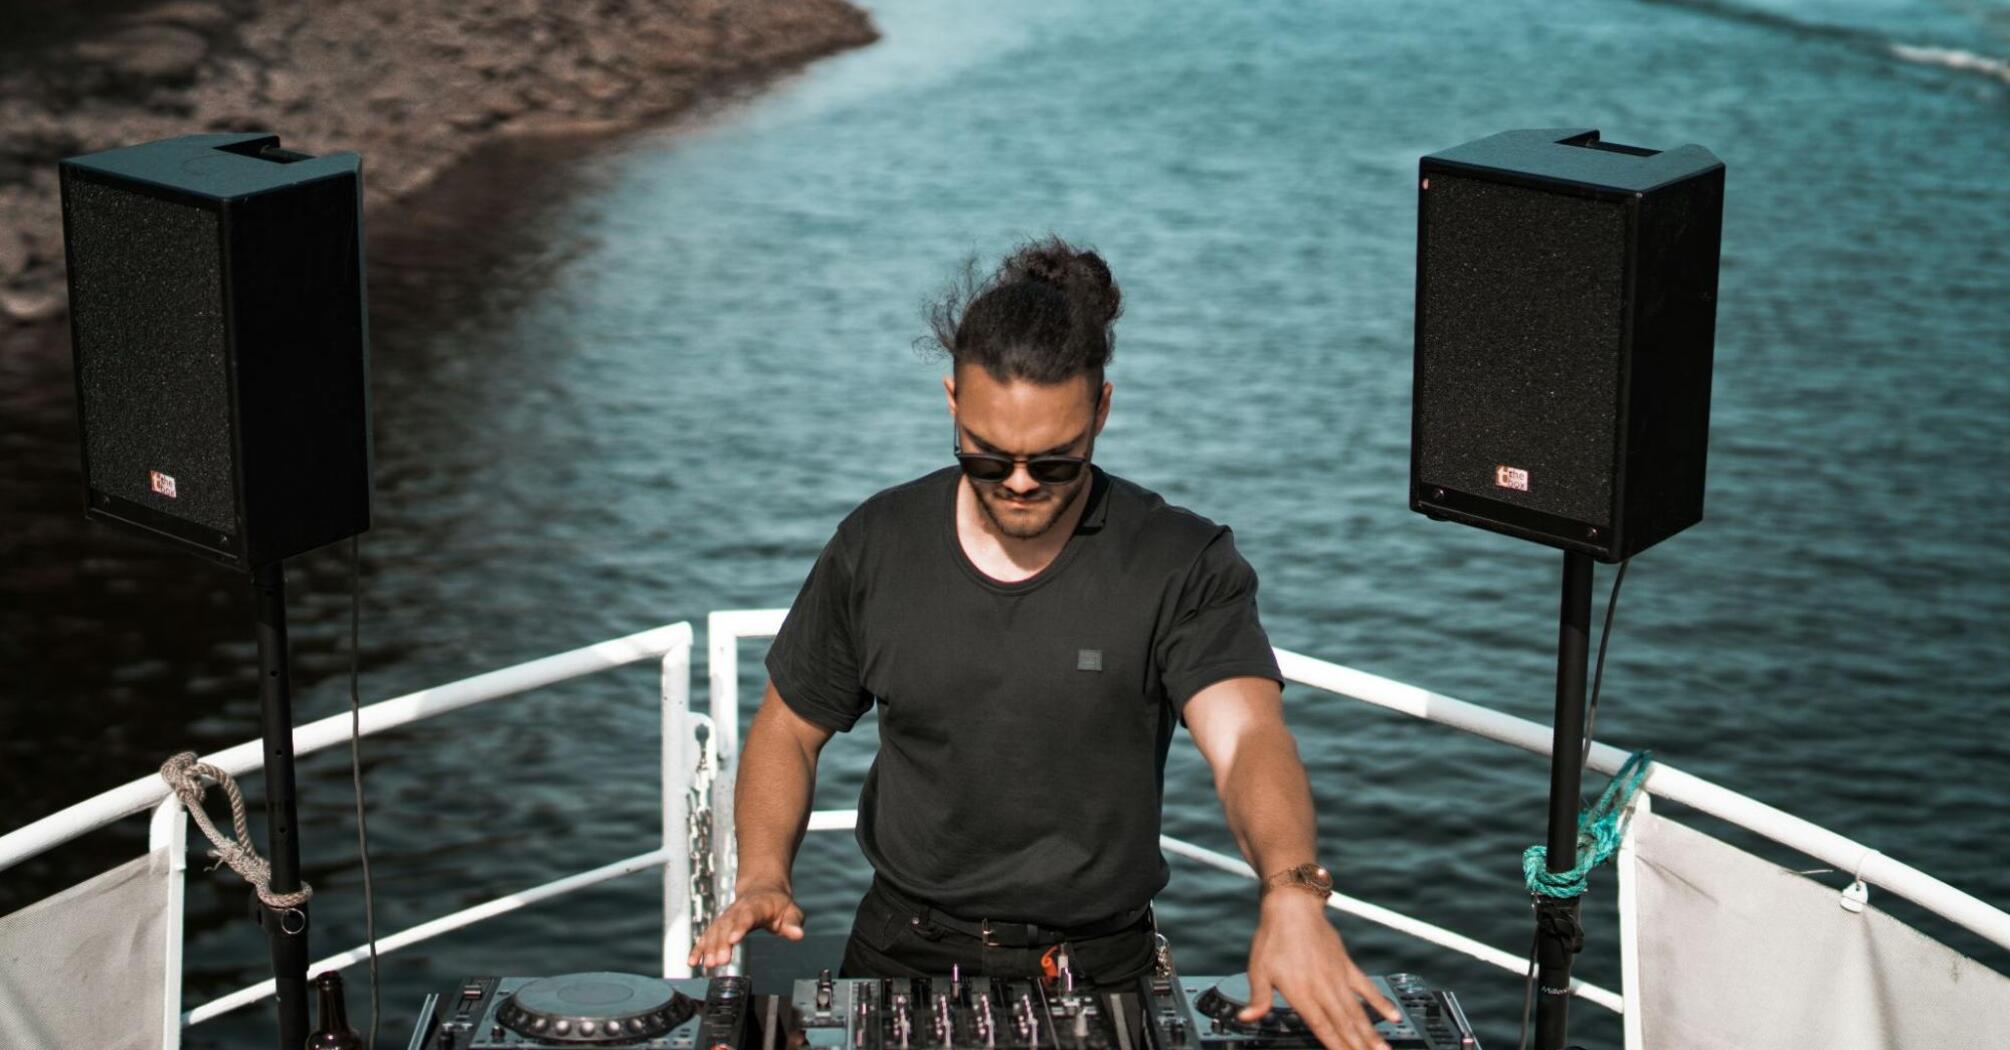 DJ Set on the Boat